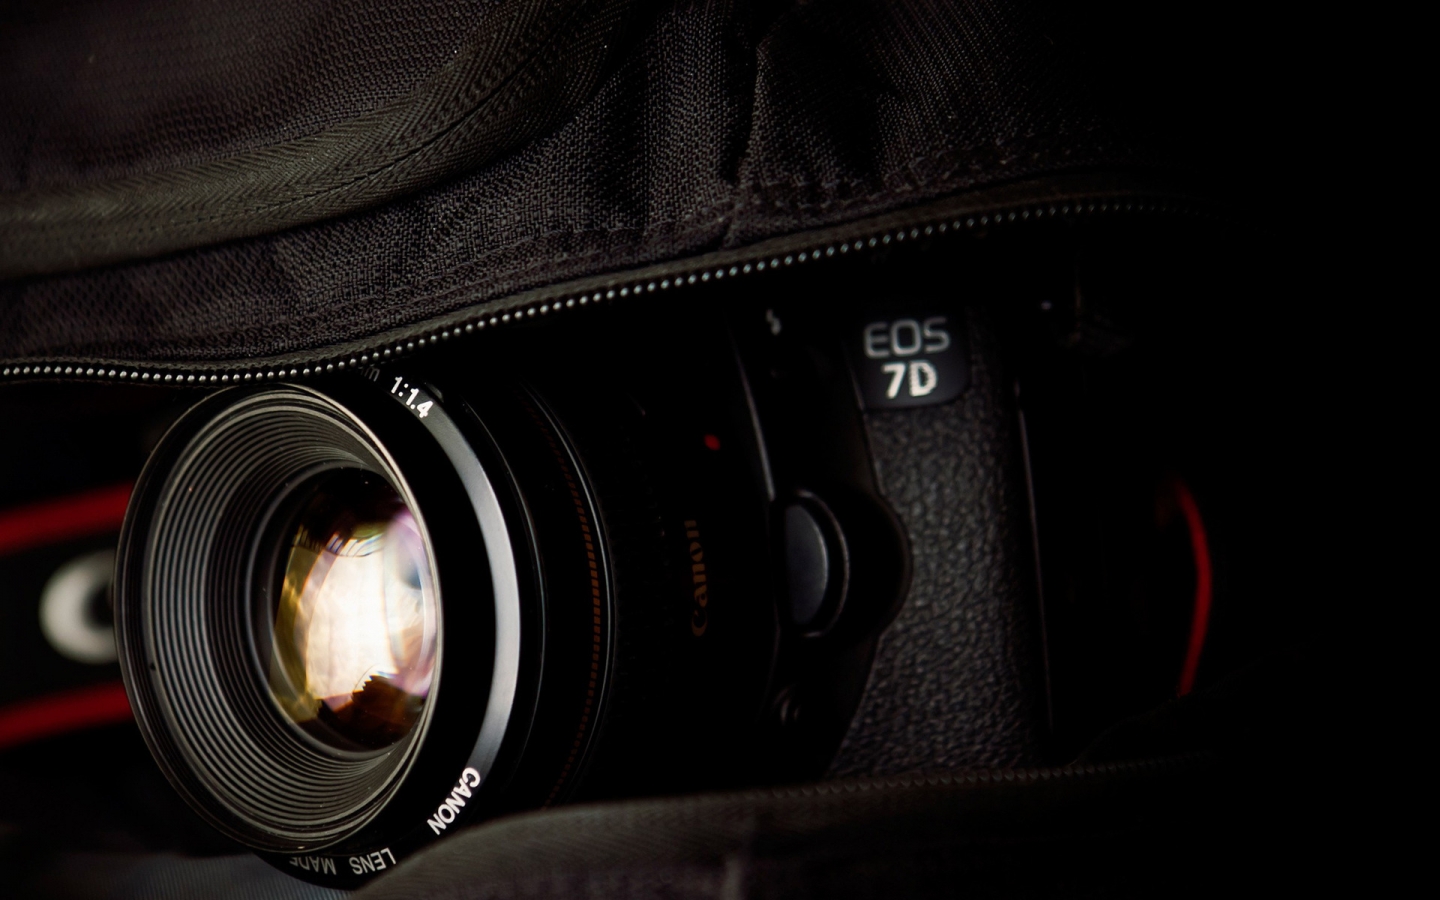 Canon EOS 7D for 1440 x 900 widescreen resolution